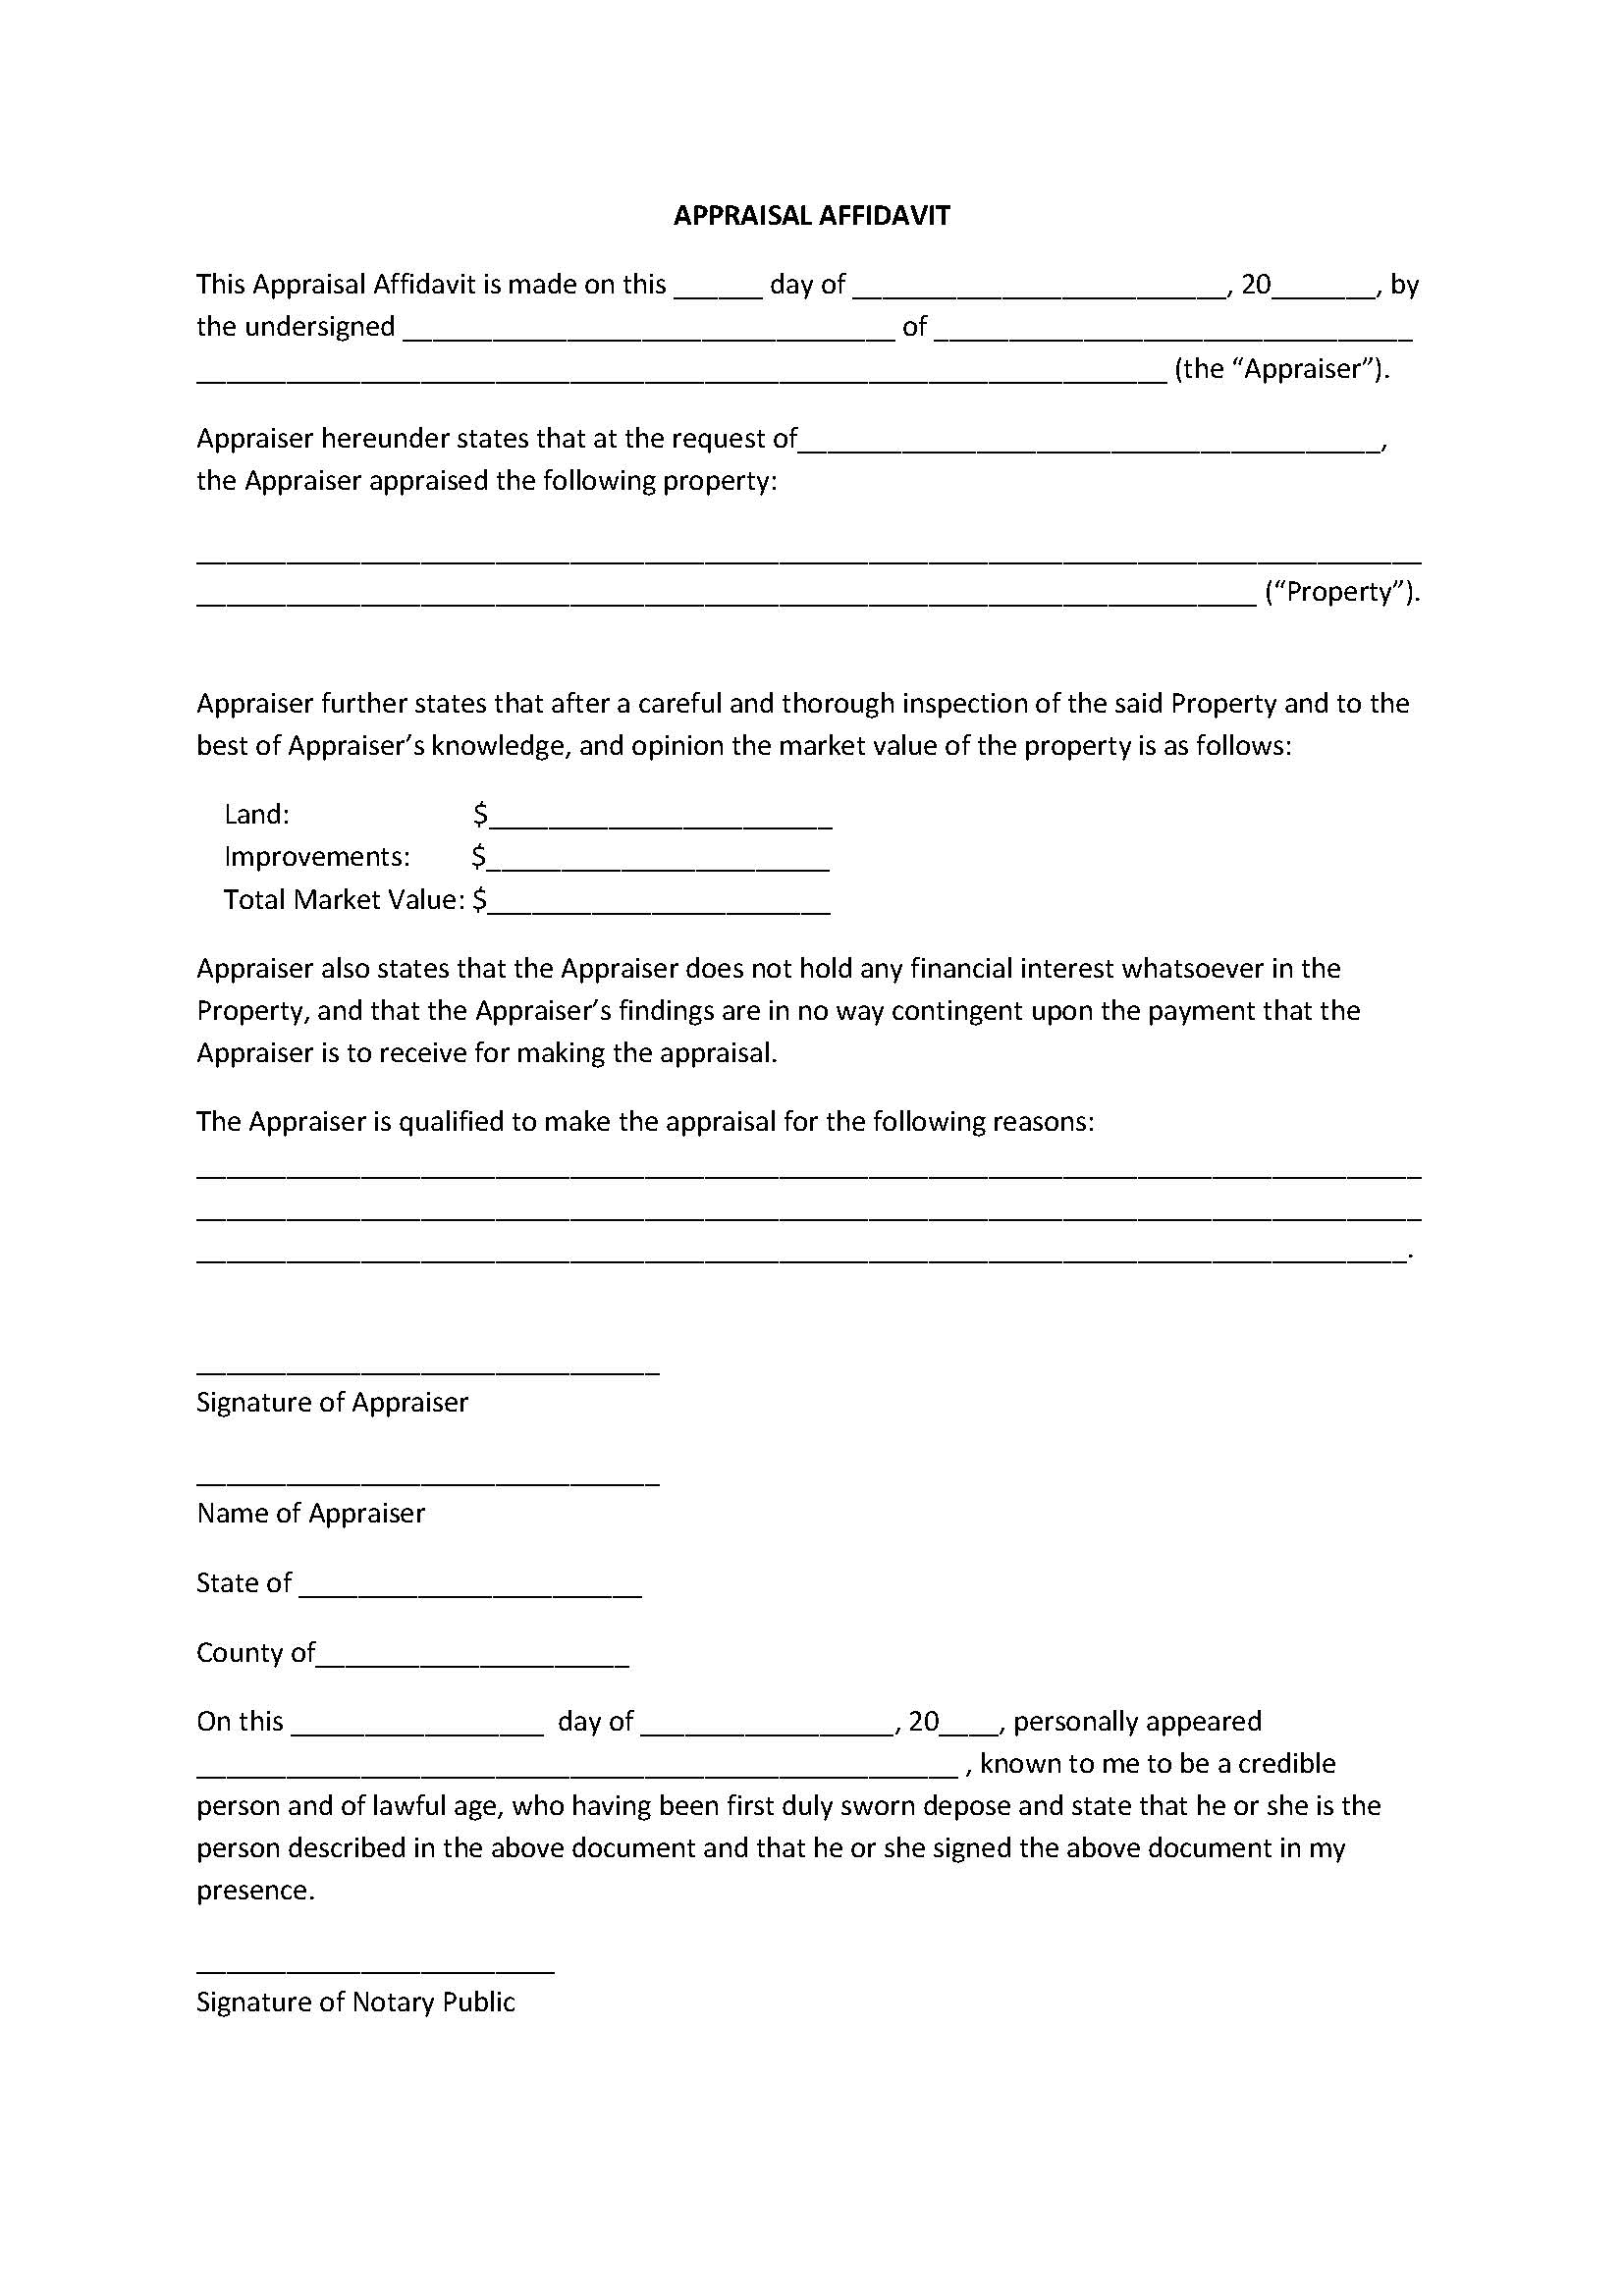 free-printable-affidavit-forms-printable-forms-free-online